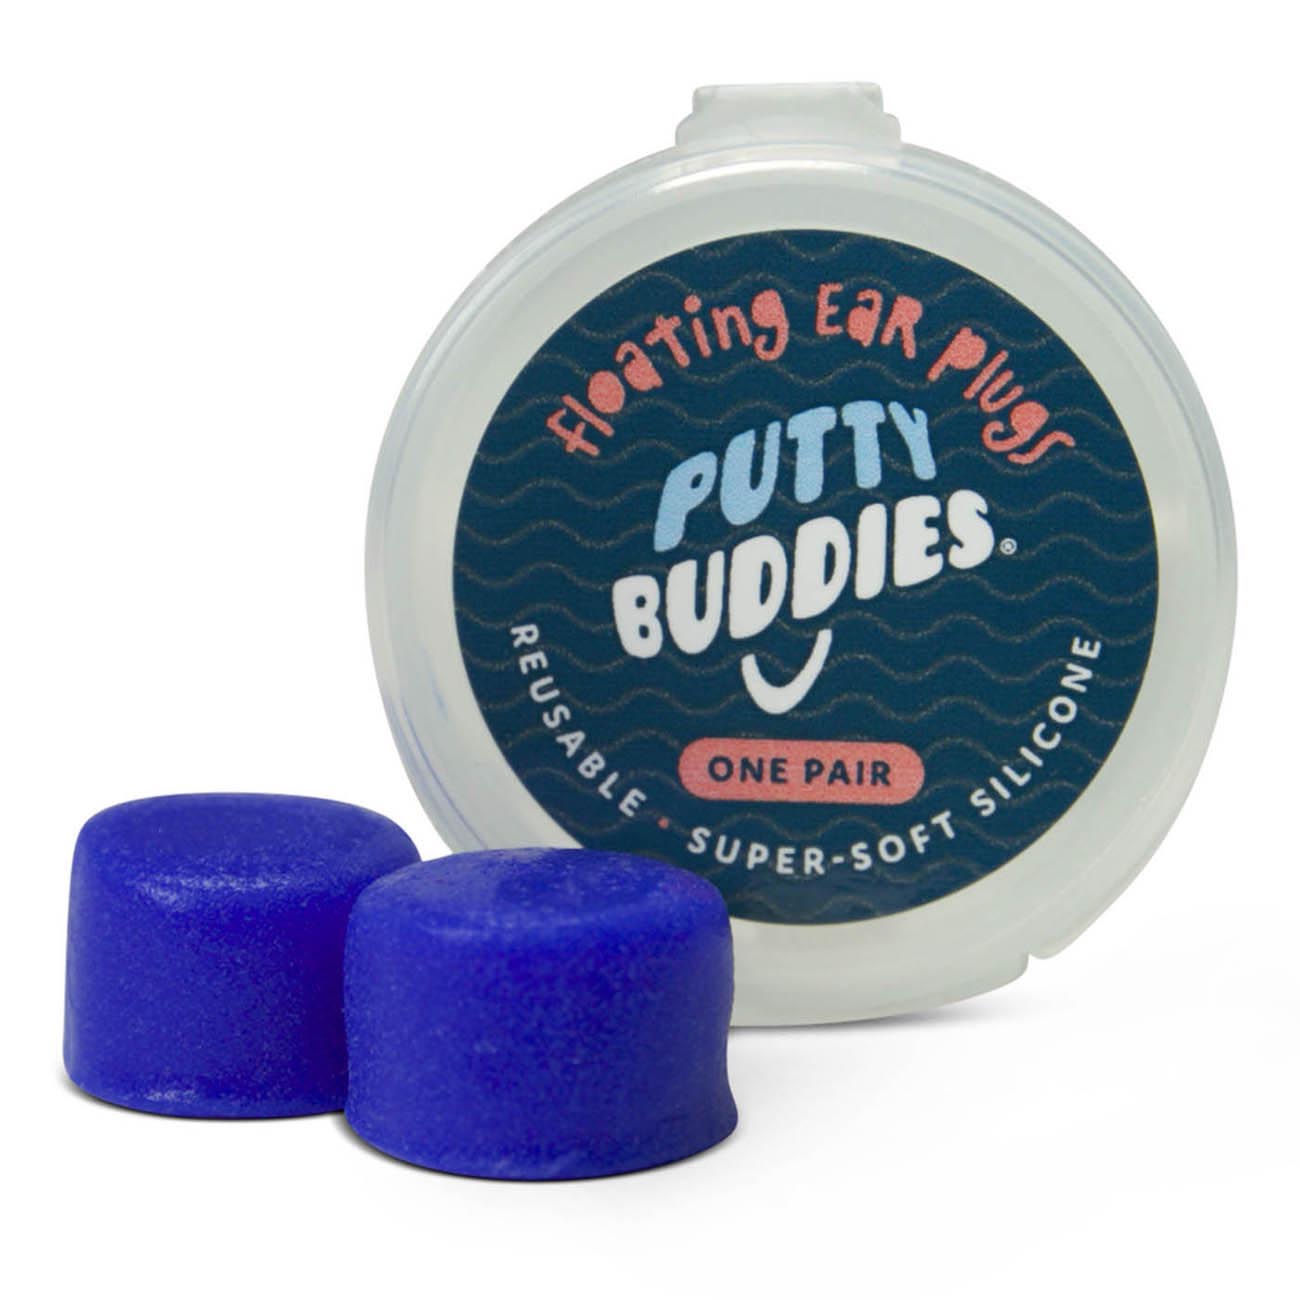 Putty Buddies Floating Ear Plugs Blue